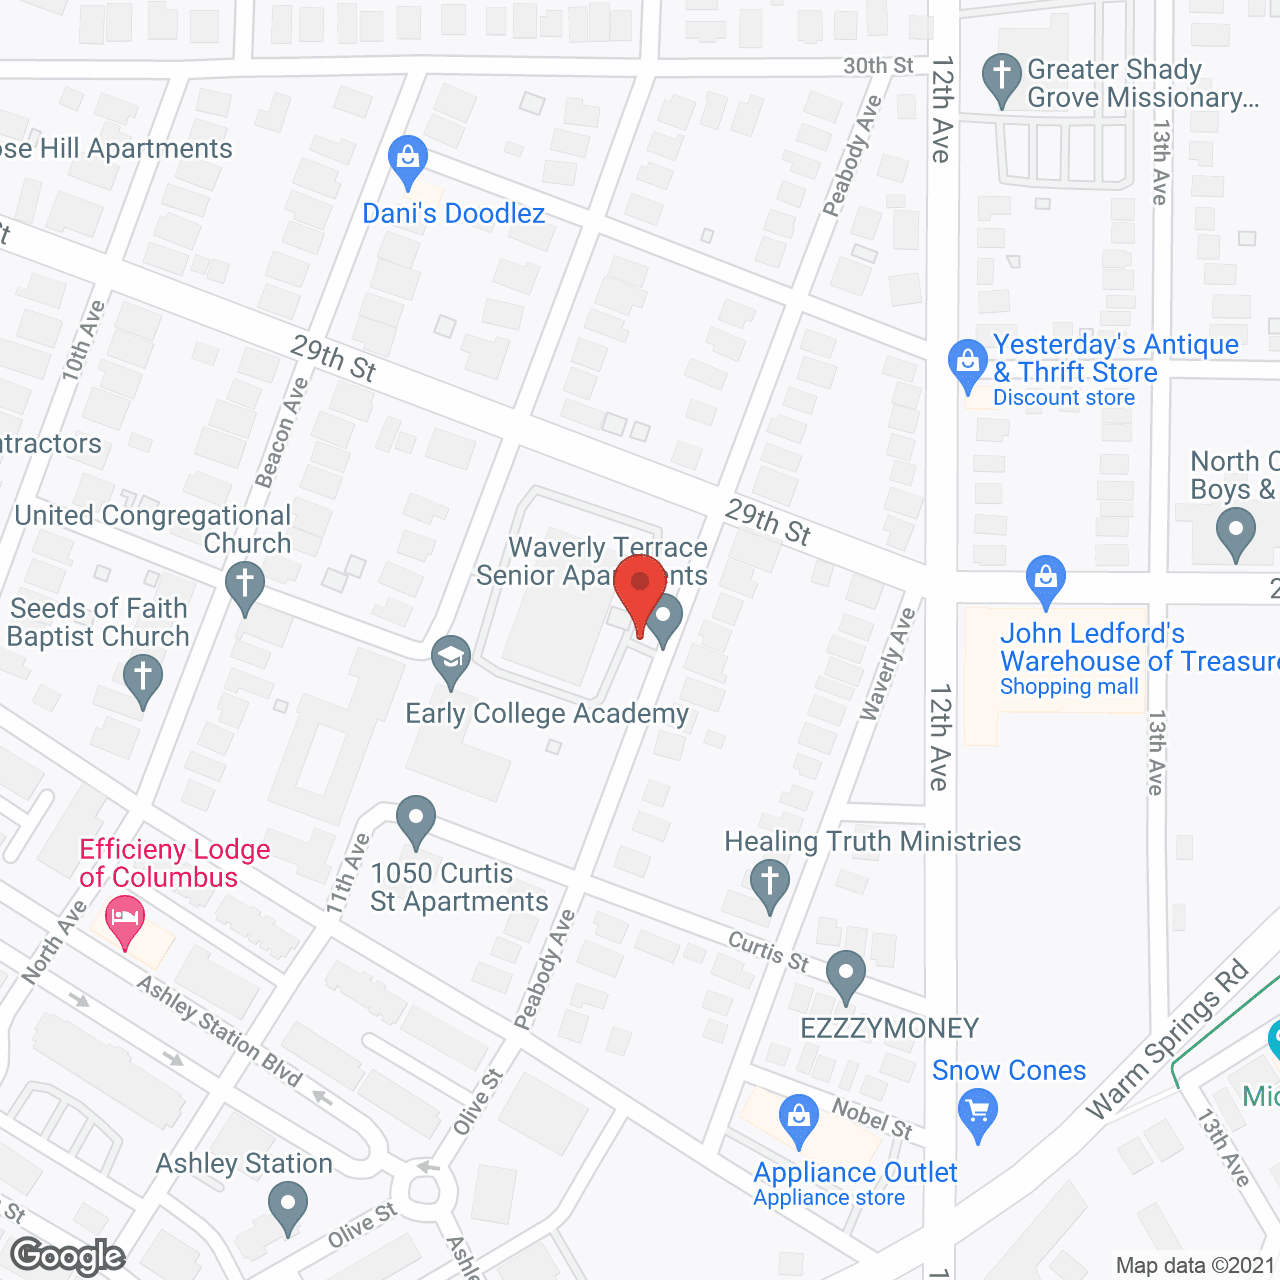 Waverly Terrace Senior Apartments in google map